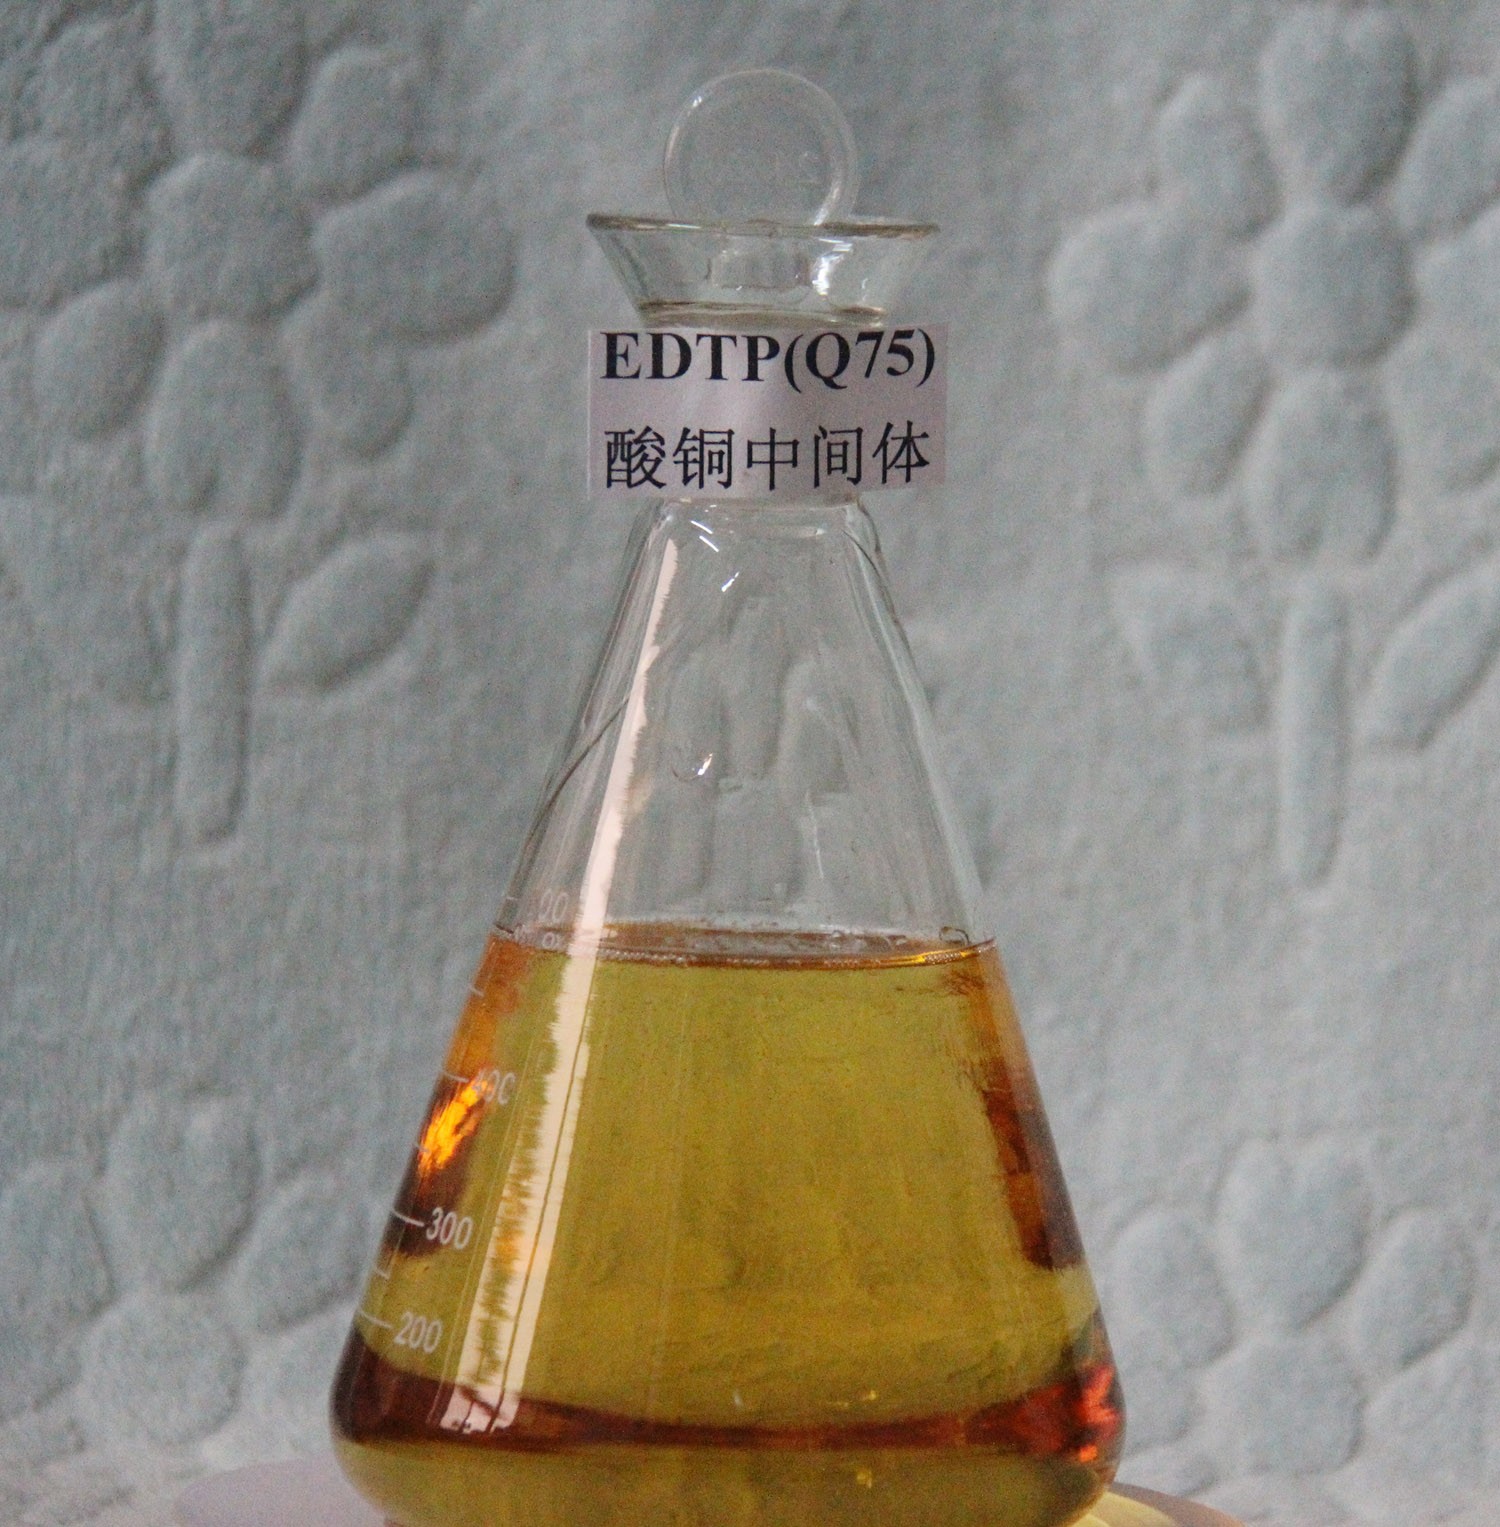 N,N,N,N-Tetrakis(2-Hydroxypropyl)- Ethylenediamine 75%